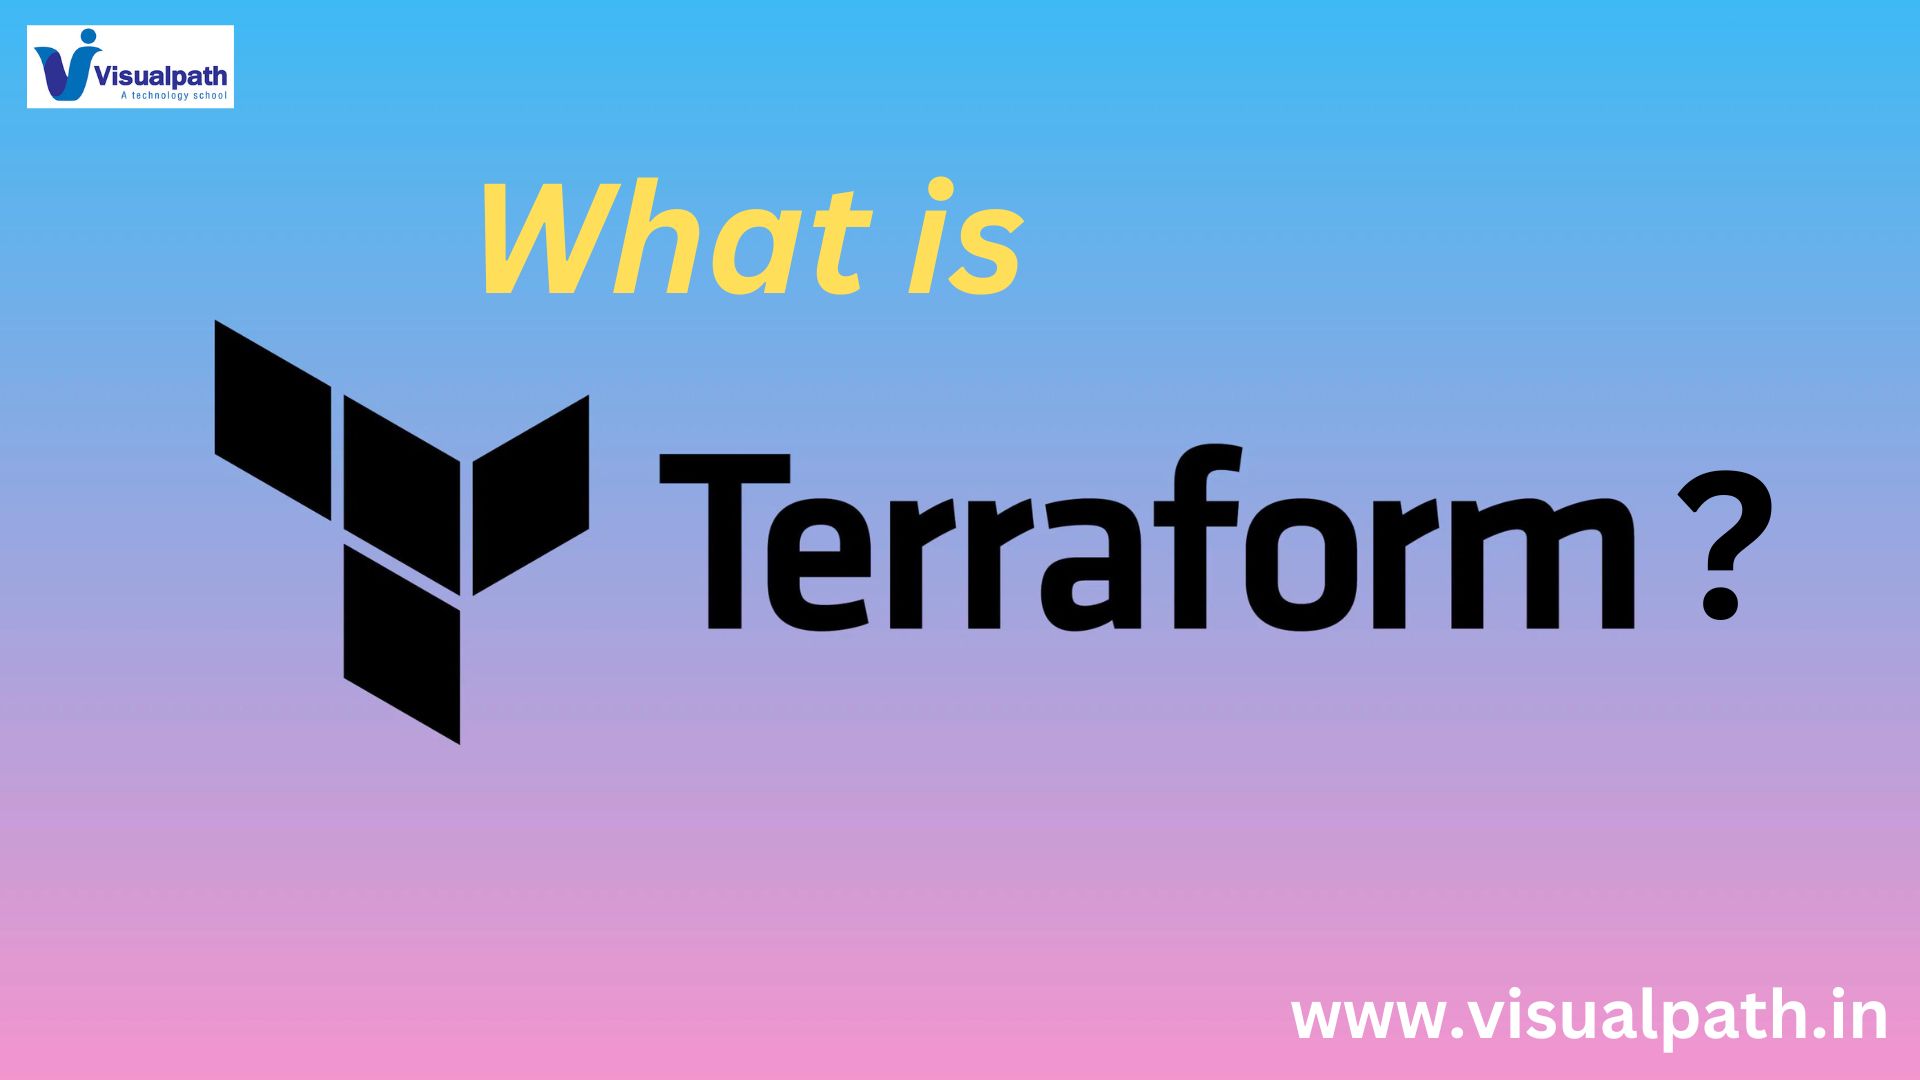 What is Terraform? Why TF? Terraform workflow